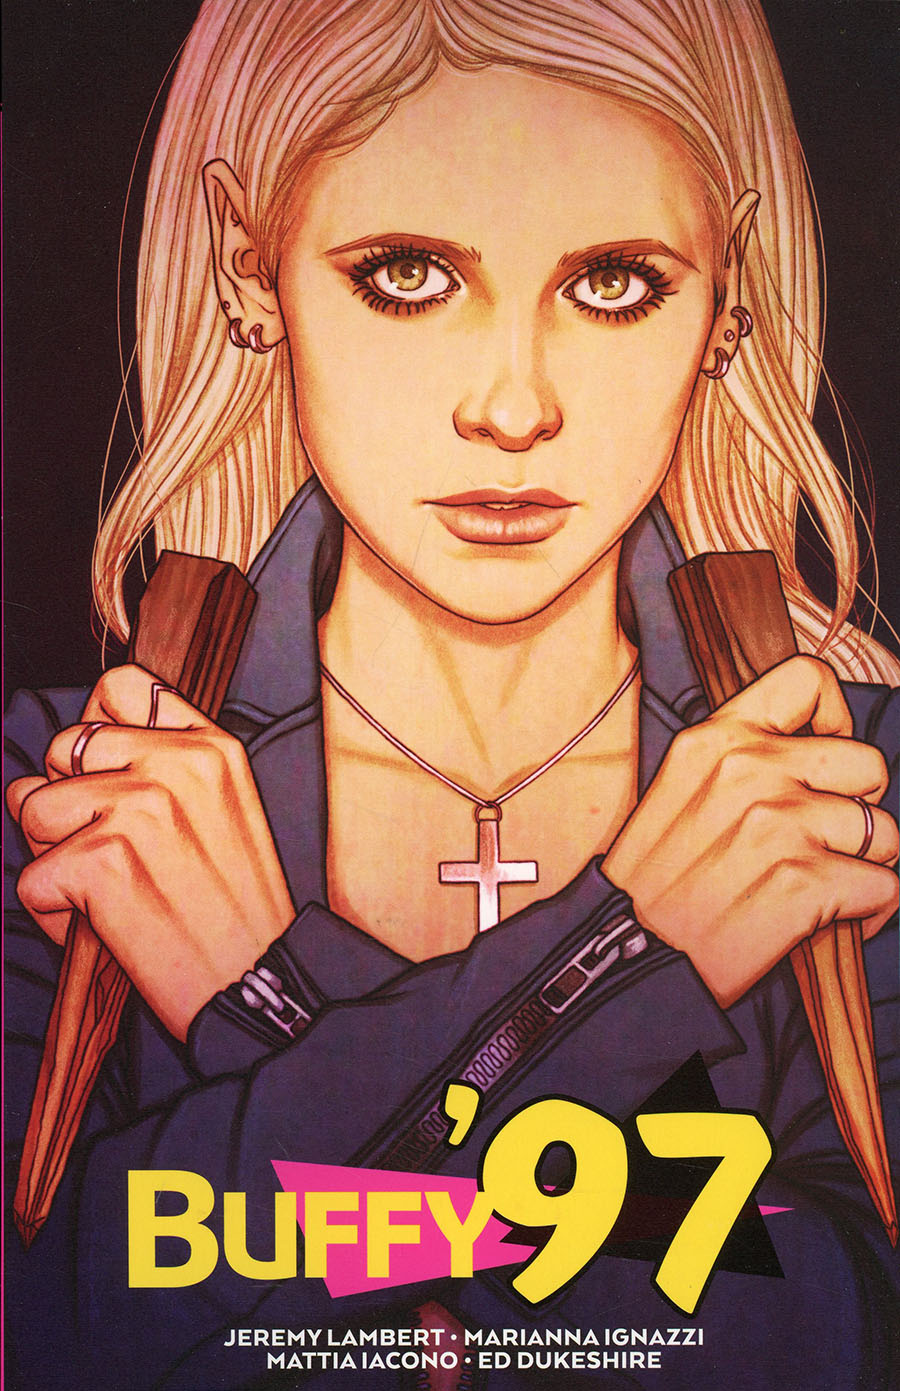 Buffy 97 TP